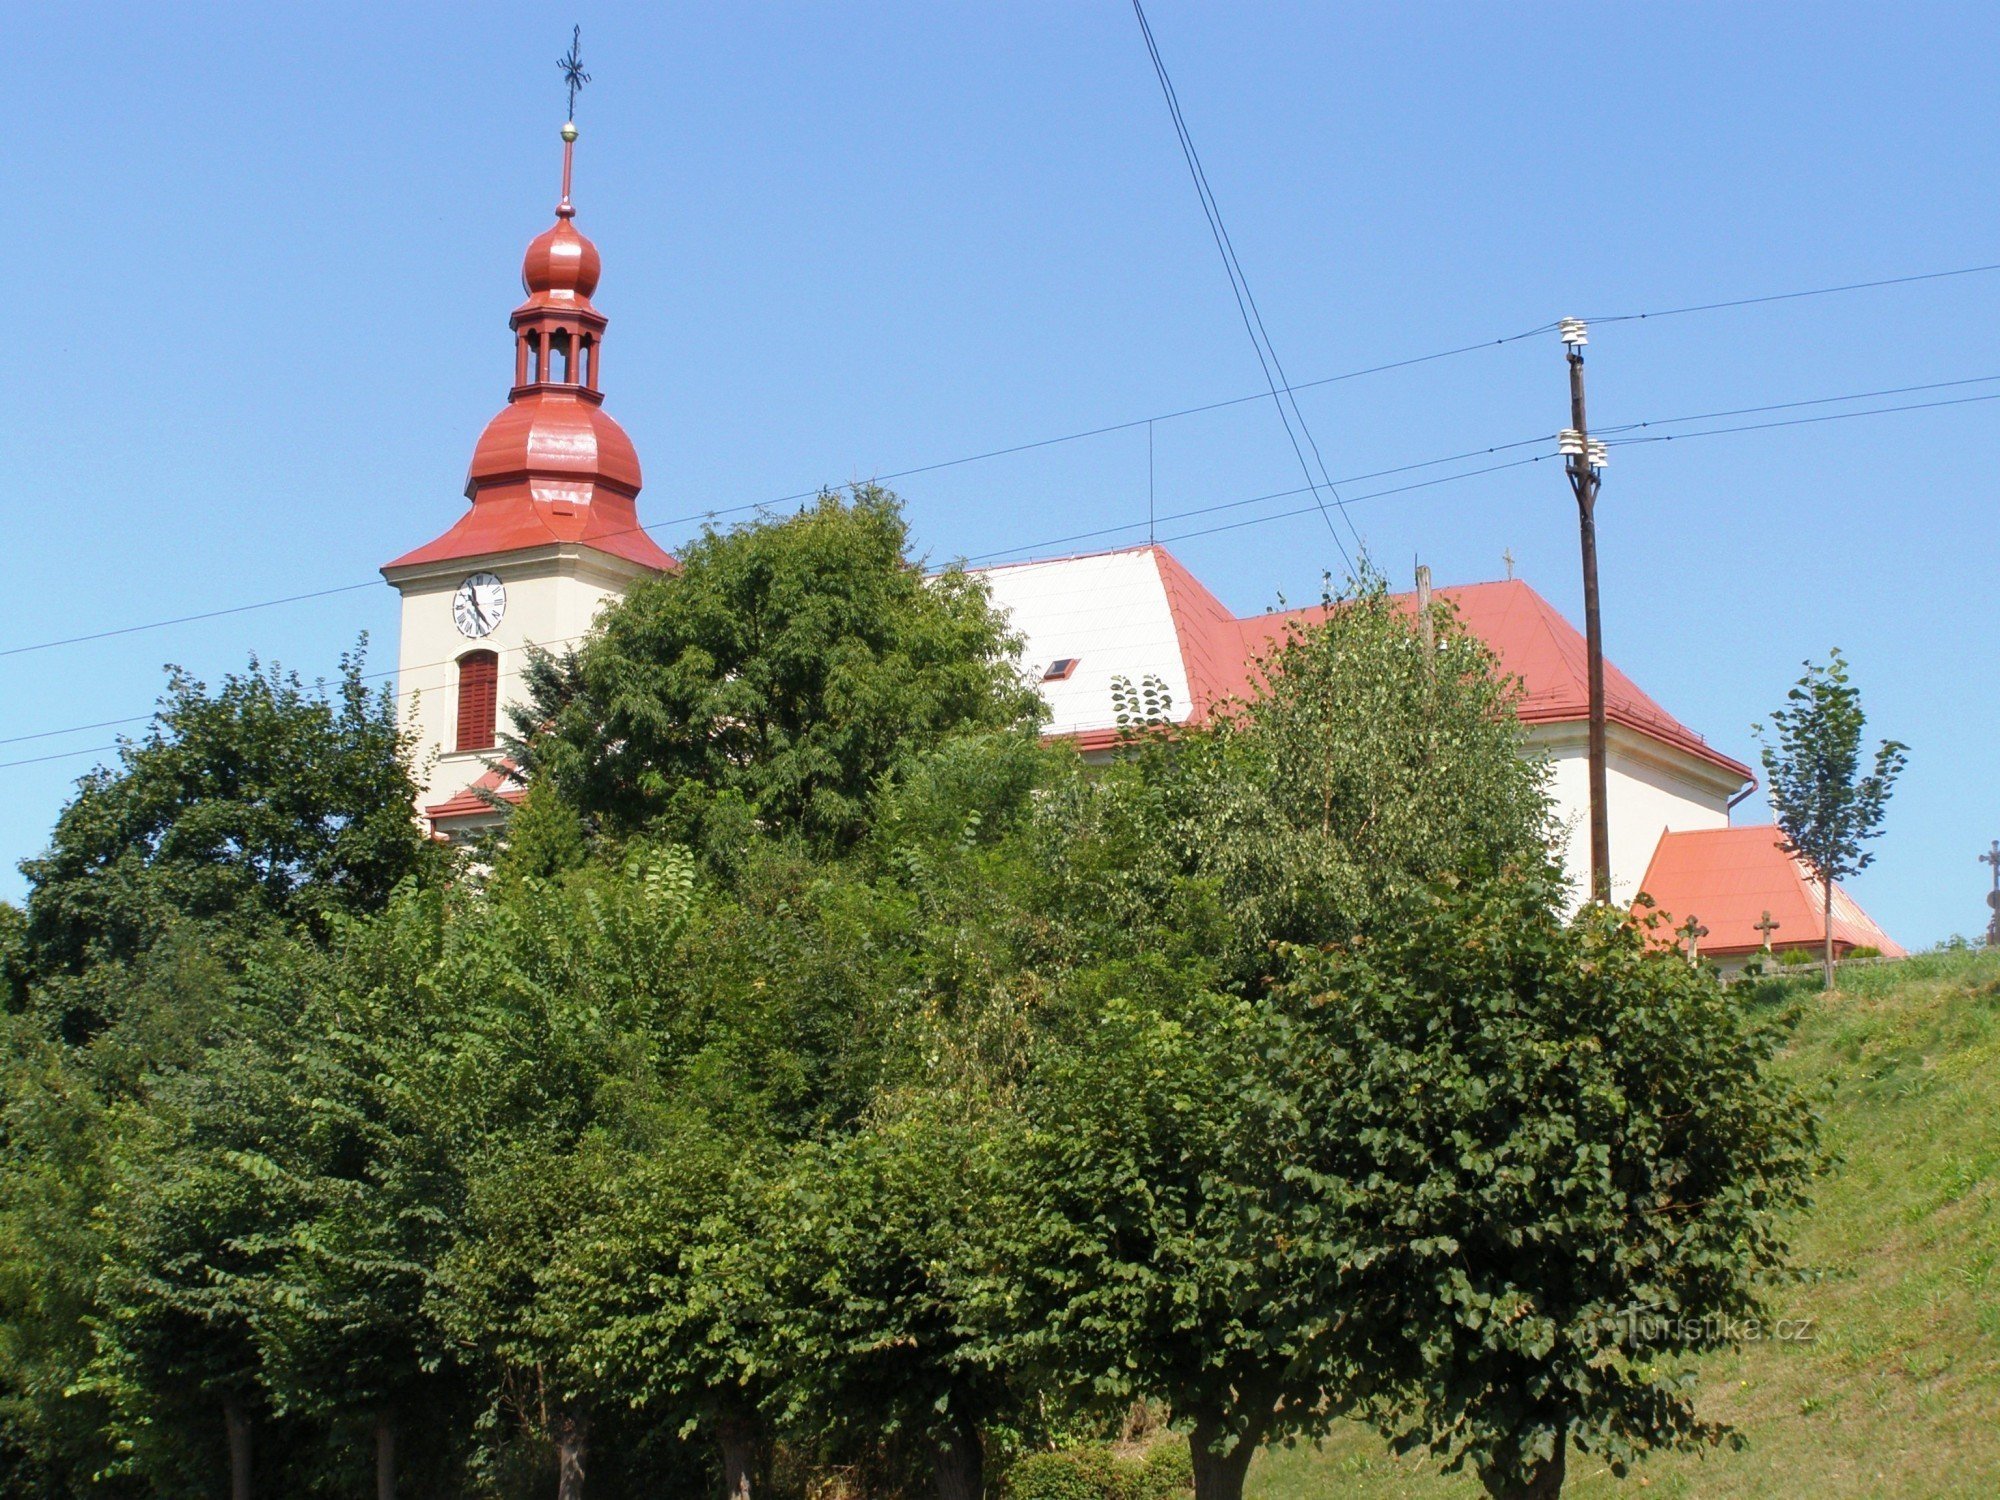 Stará Paka - kerk van St. Laurentius